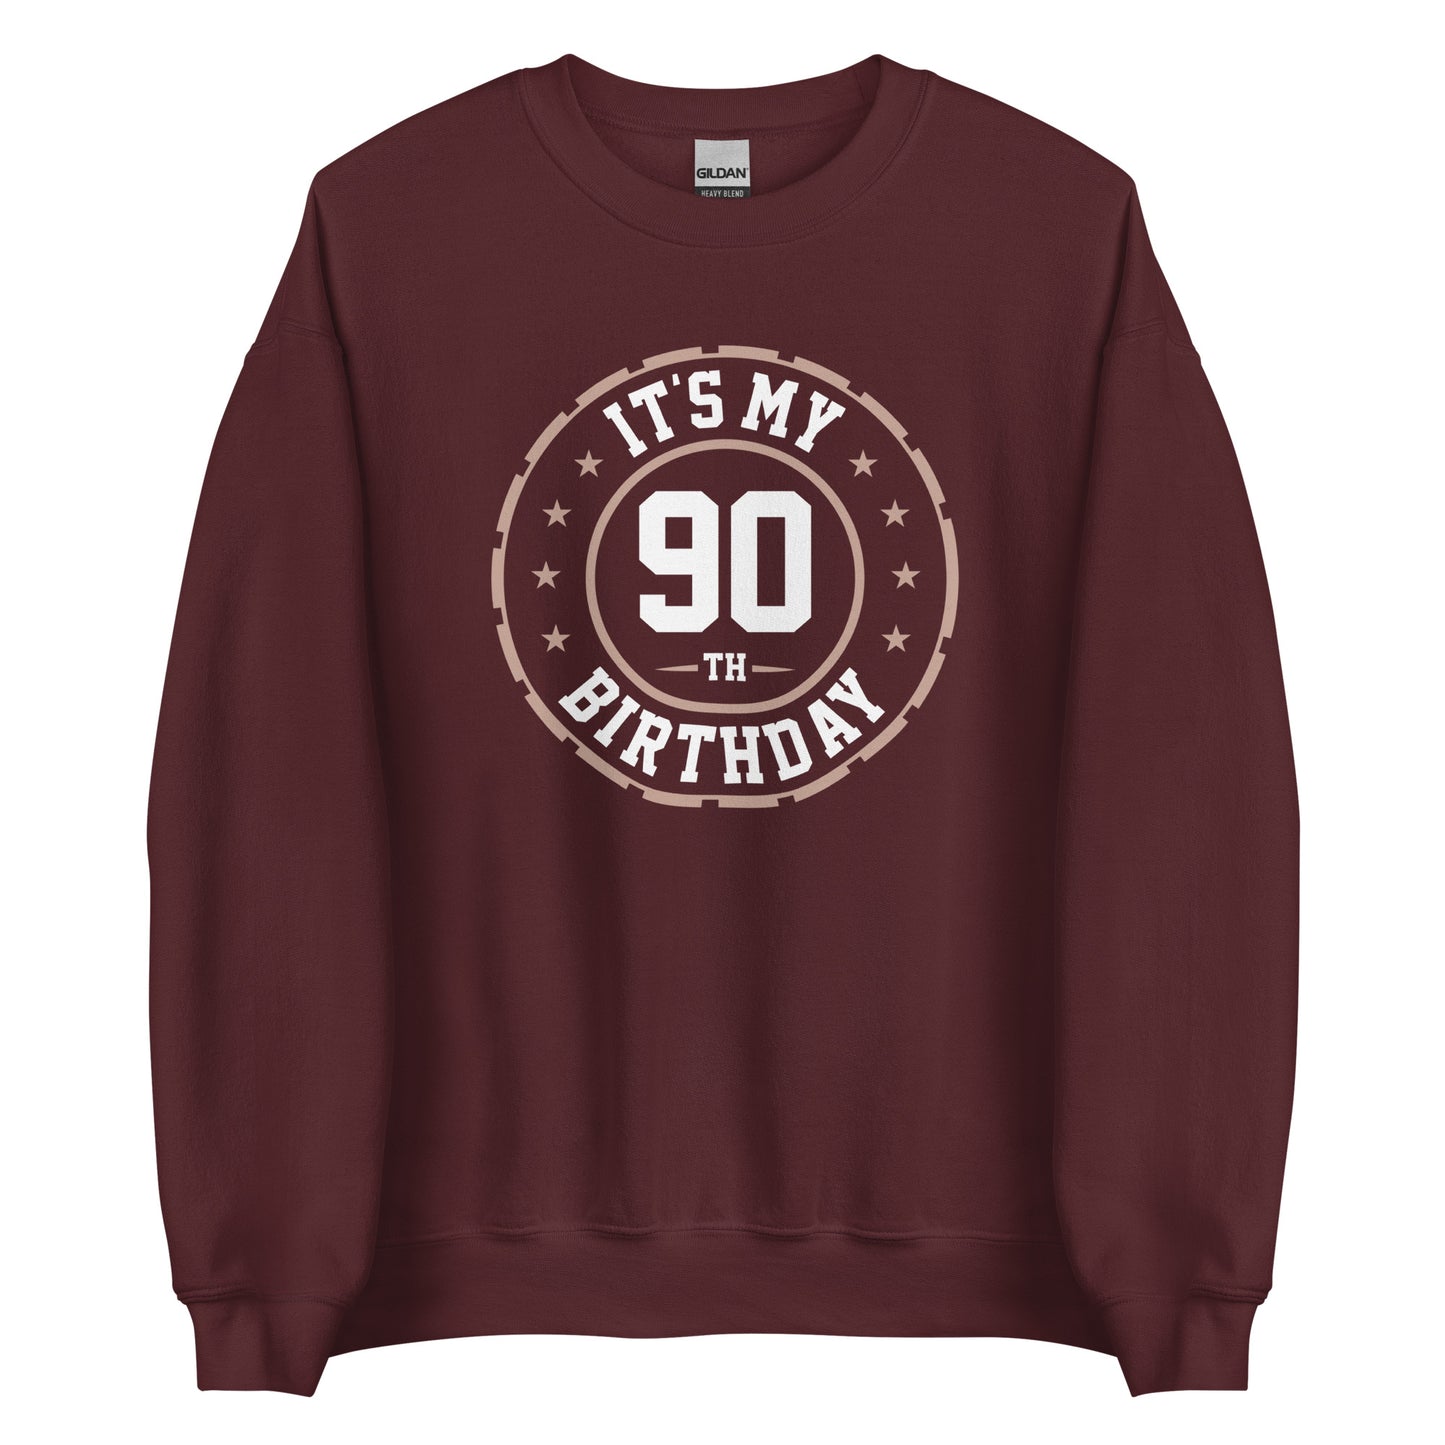 90th Birthday Sweatshirt, 90 Years Graphic Crewneck Fleece Cotton Sweater Jumper Pullover Men Women Adult Aesthetic Top Starcove Fashion